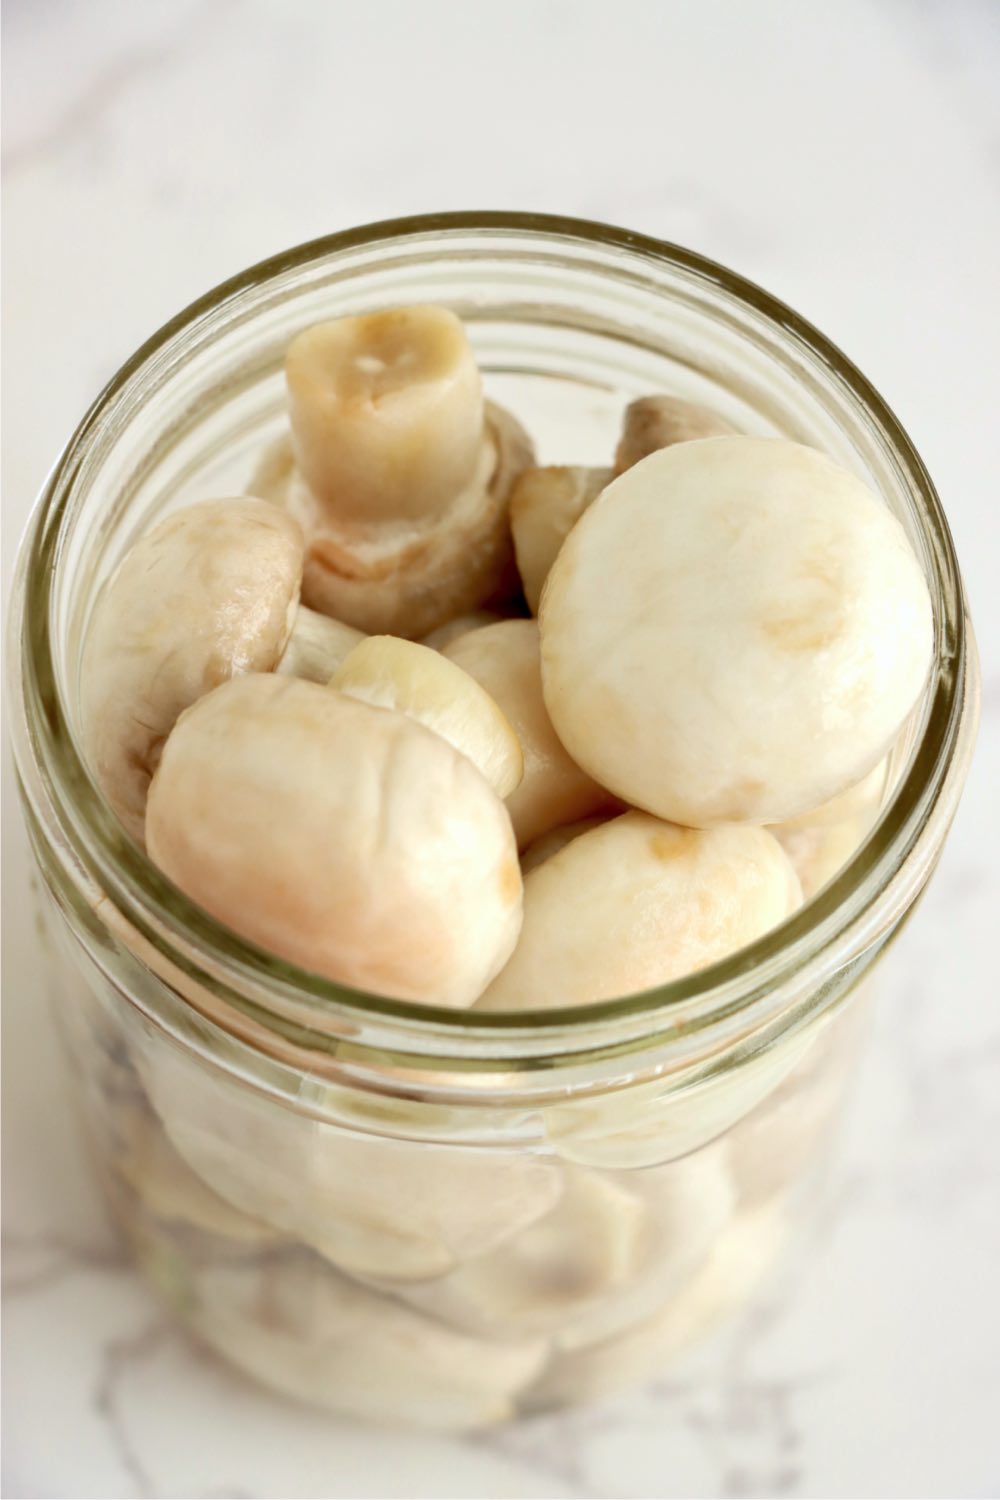 Glass mason jar filled with clean fresh button mushrooms